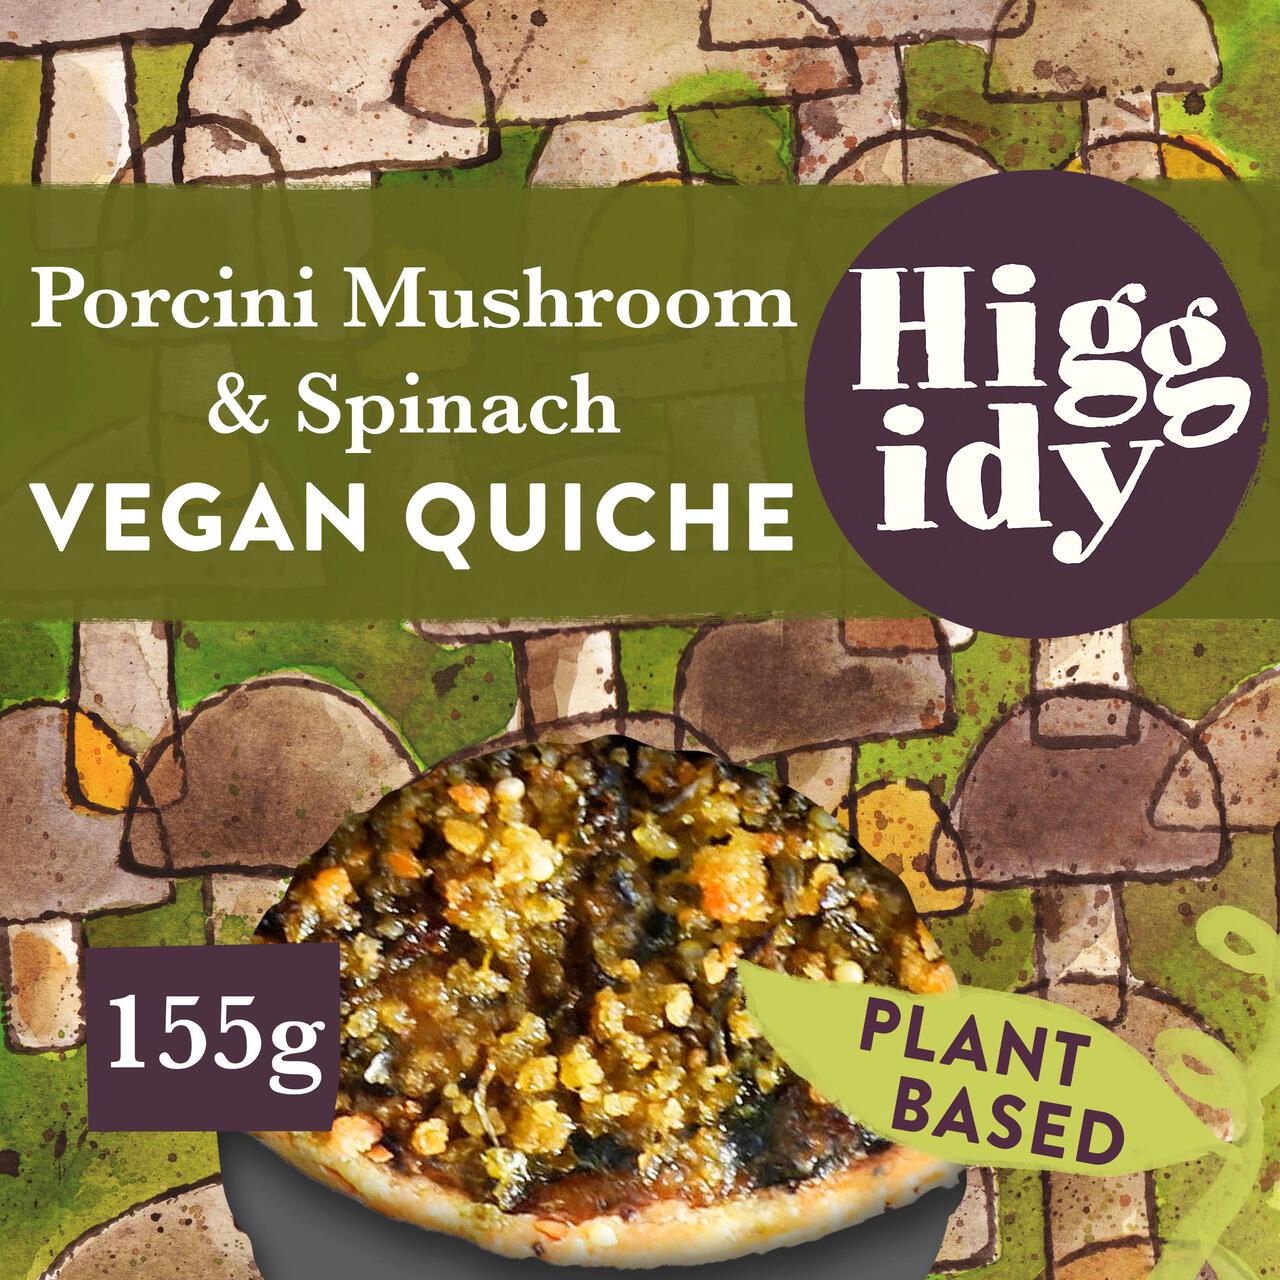 Higgidy Porcini Mushroom & Spinach Vegan Quiche 155g